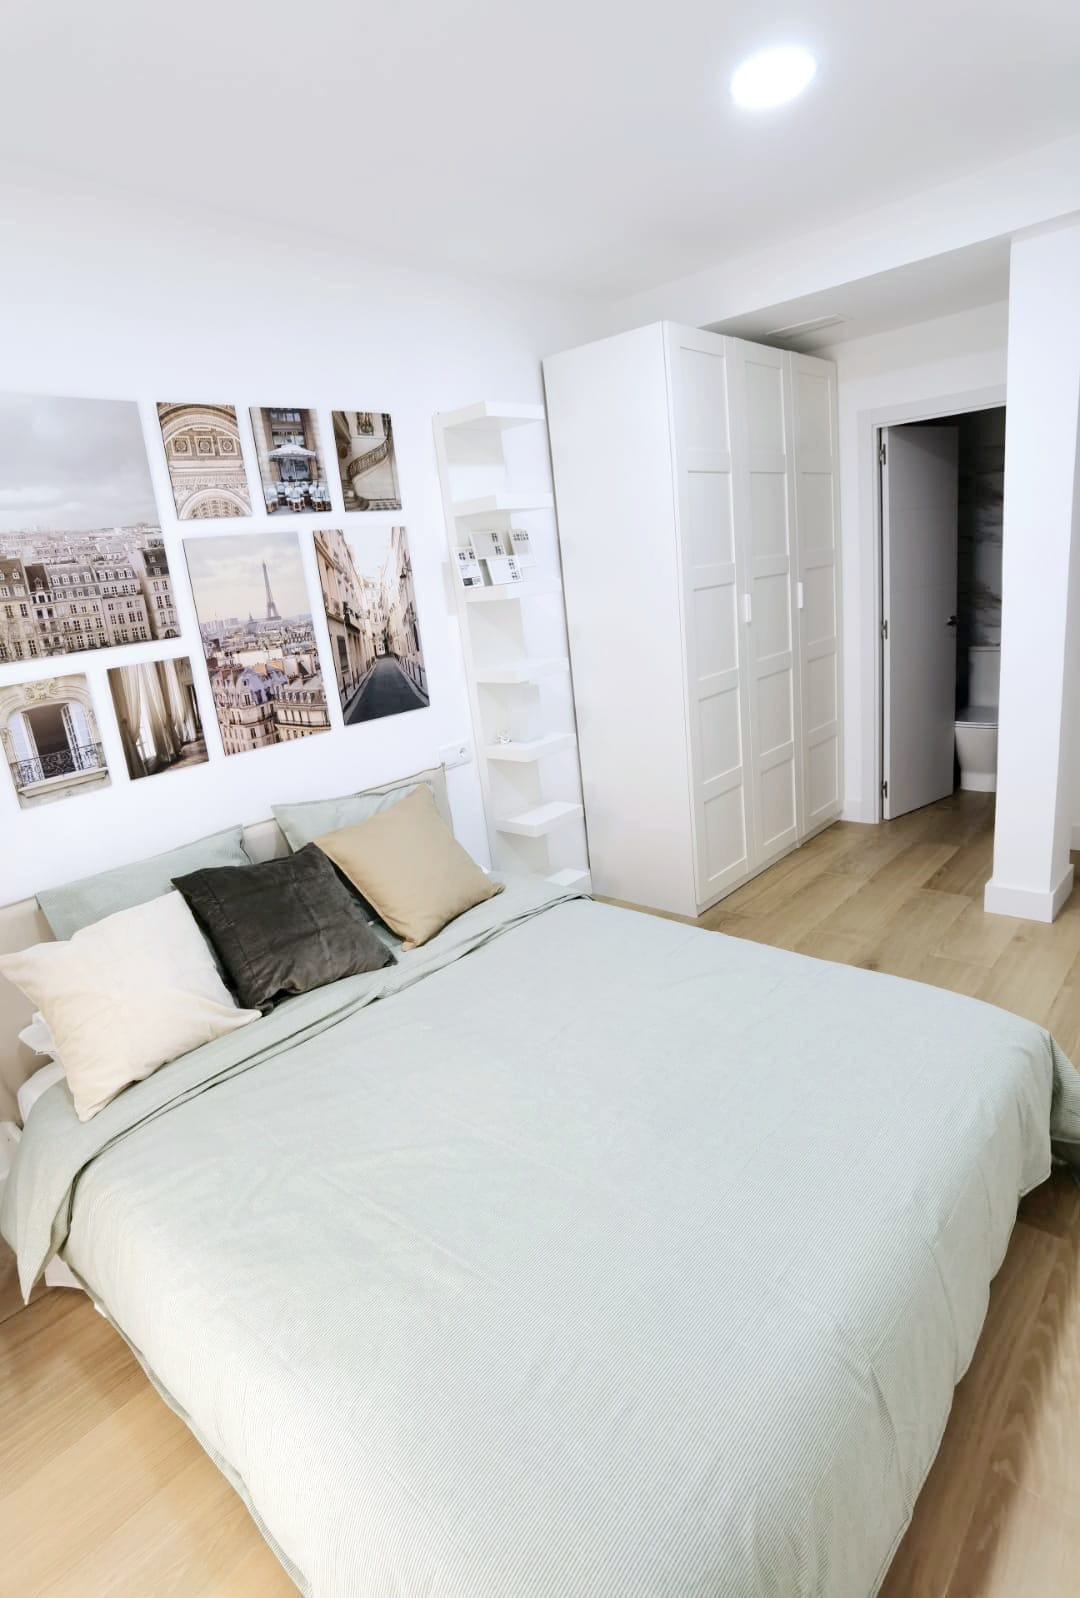 Amazing flat in city center-Sevillarooms